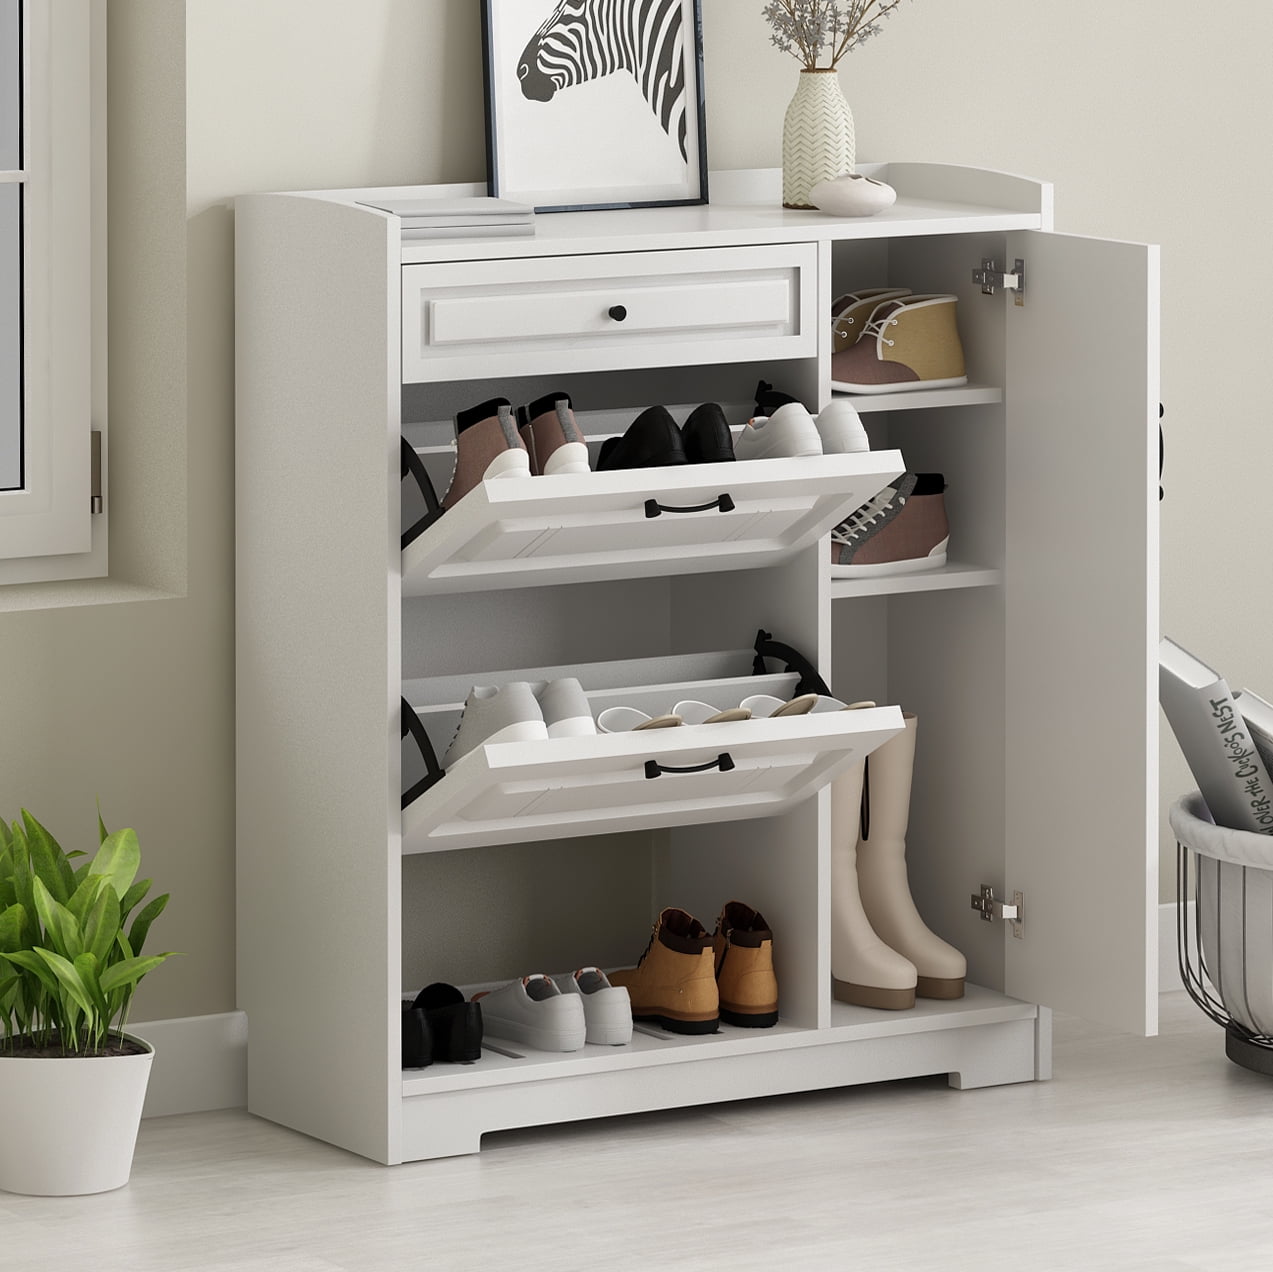 Kerrogee 18-Pair Shoe Storage Cabinet with 3 Flip Drawers Wood